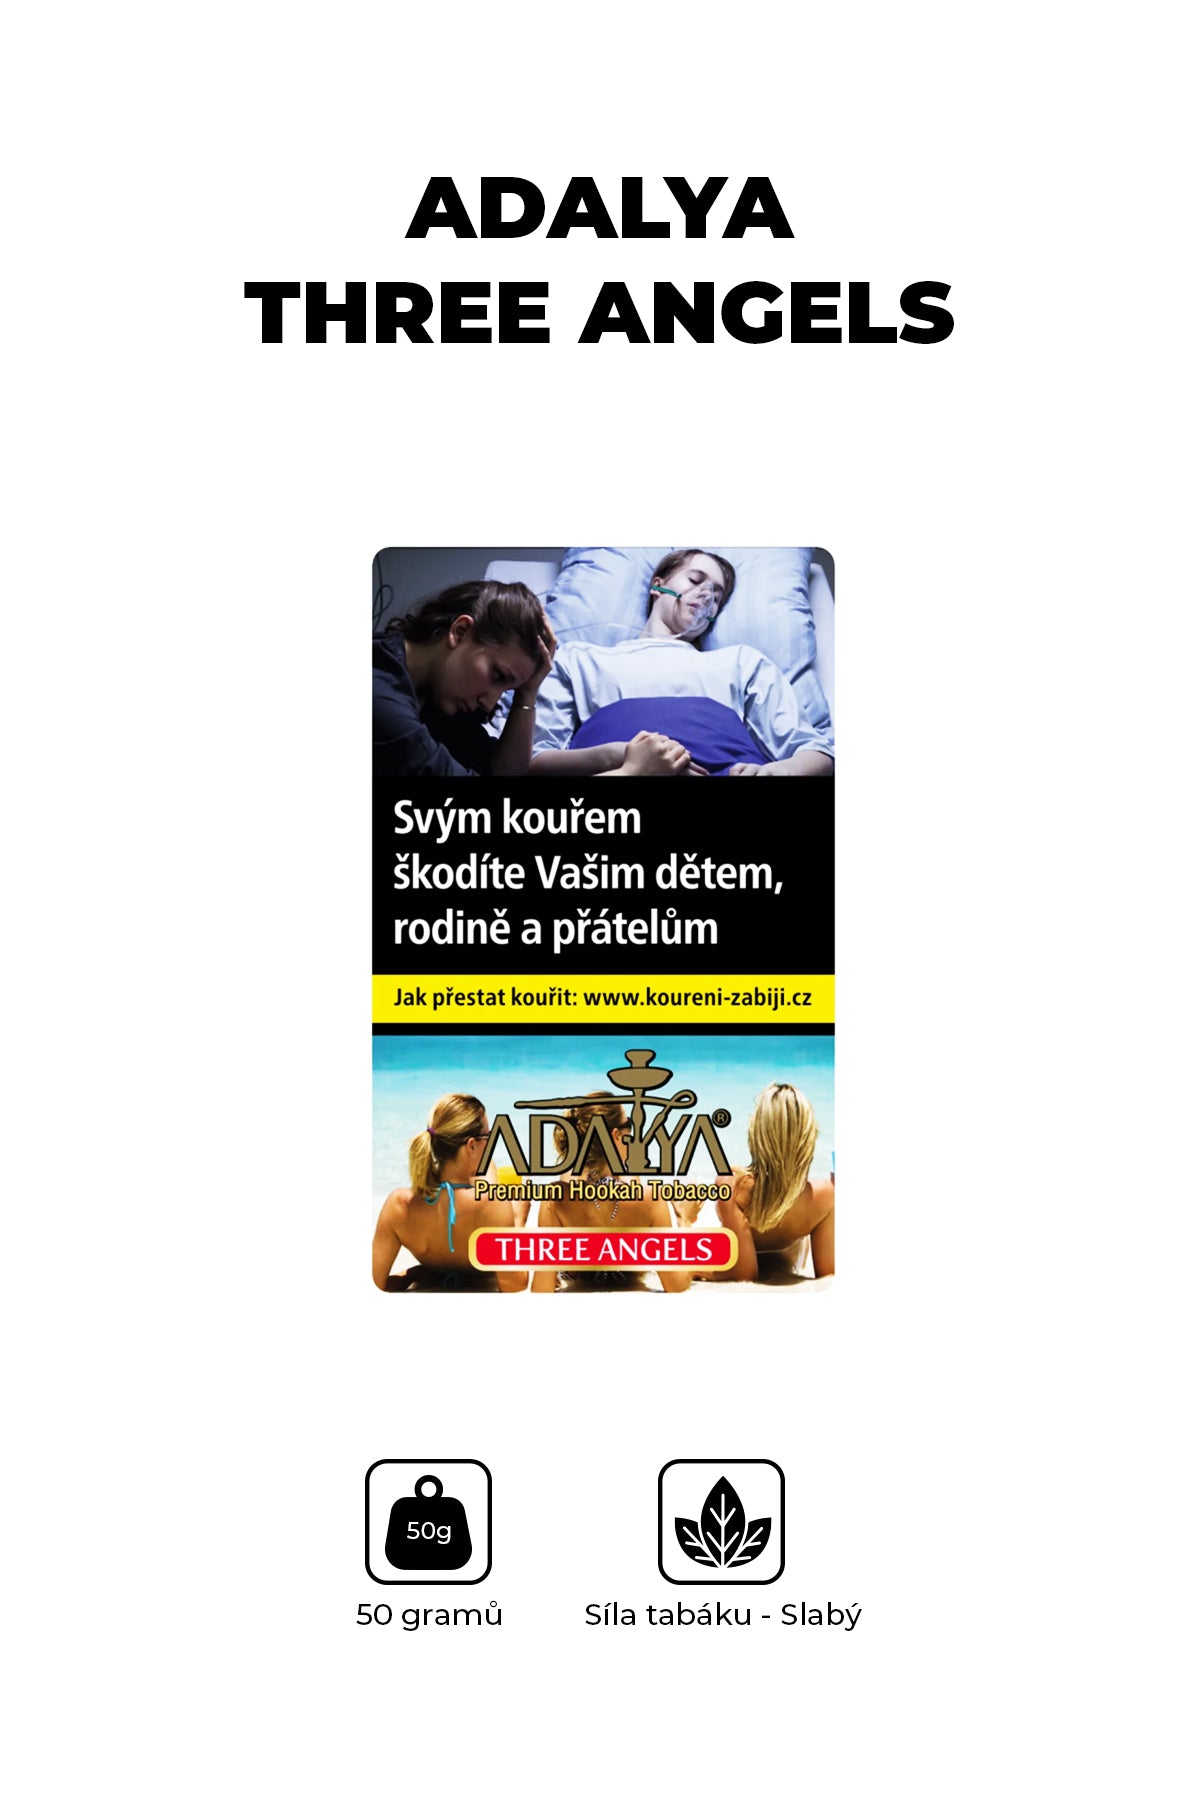 Tabák - Adalya 50g - Three Angels